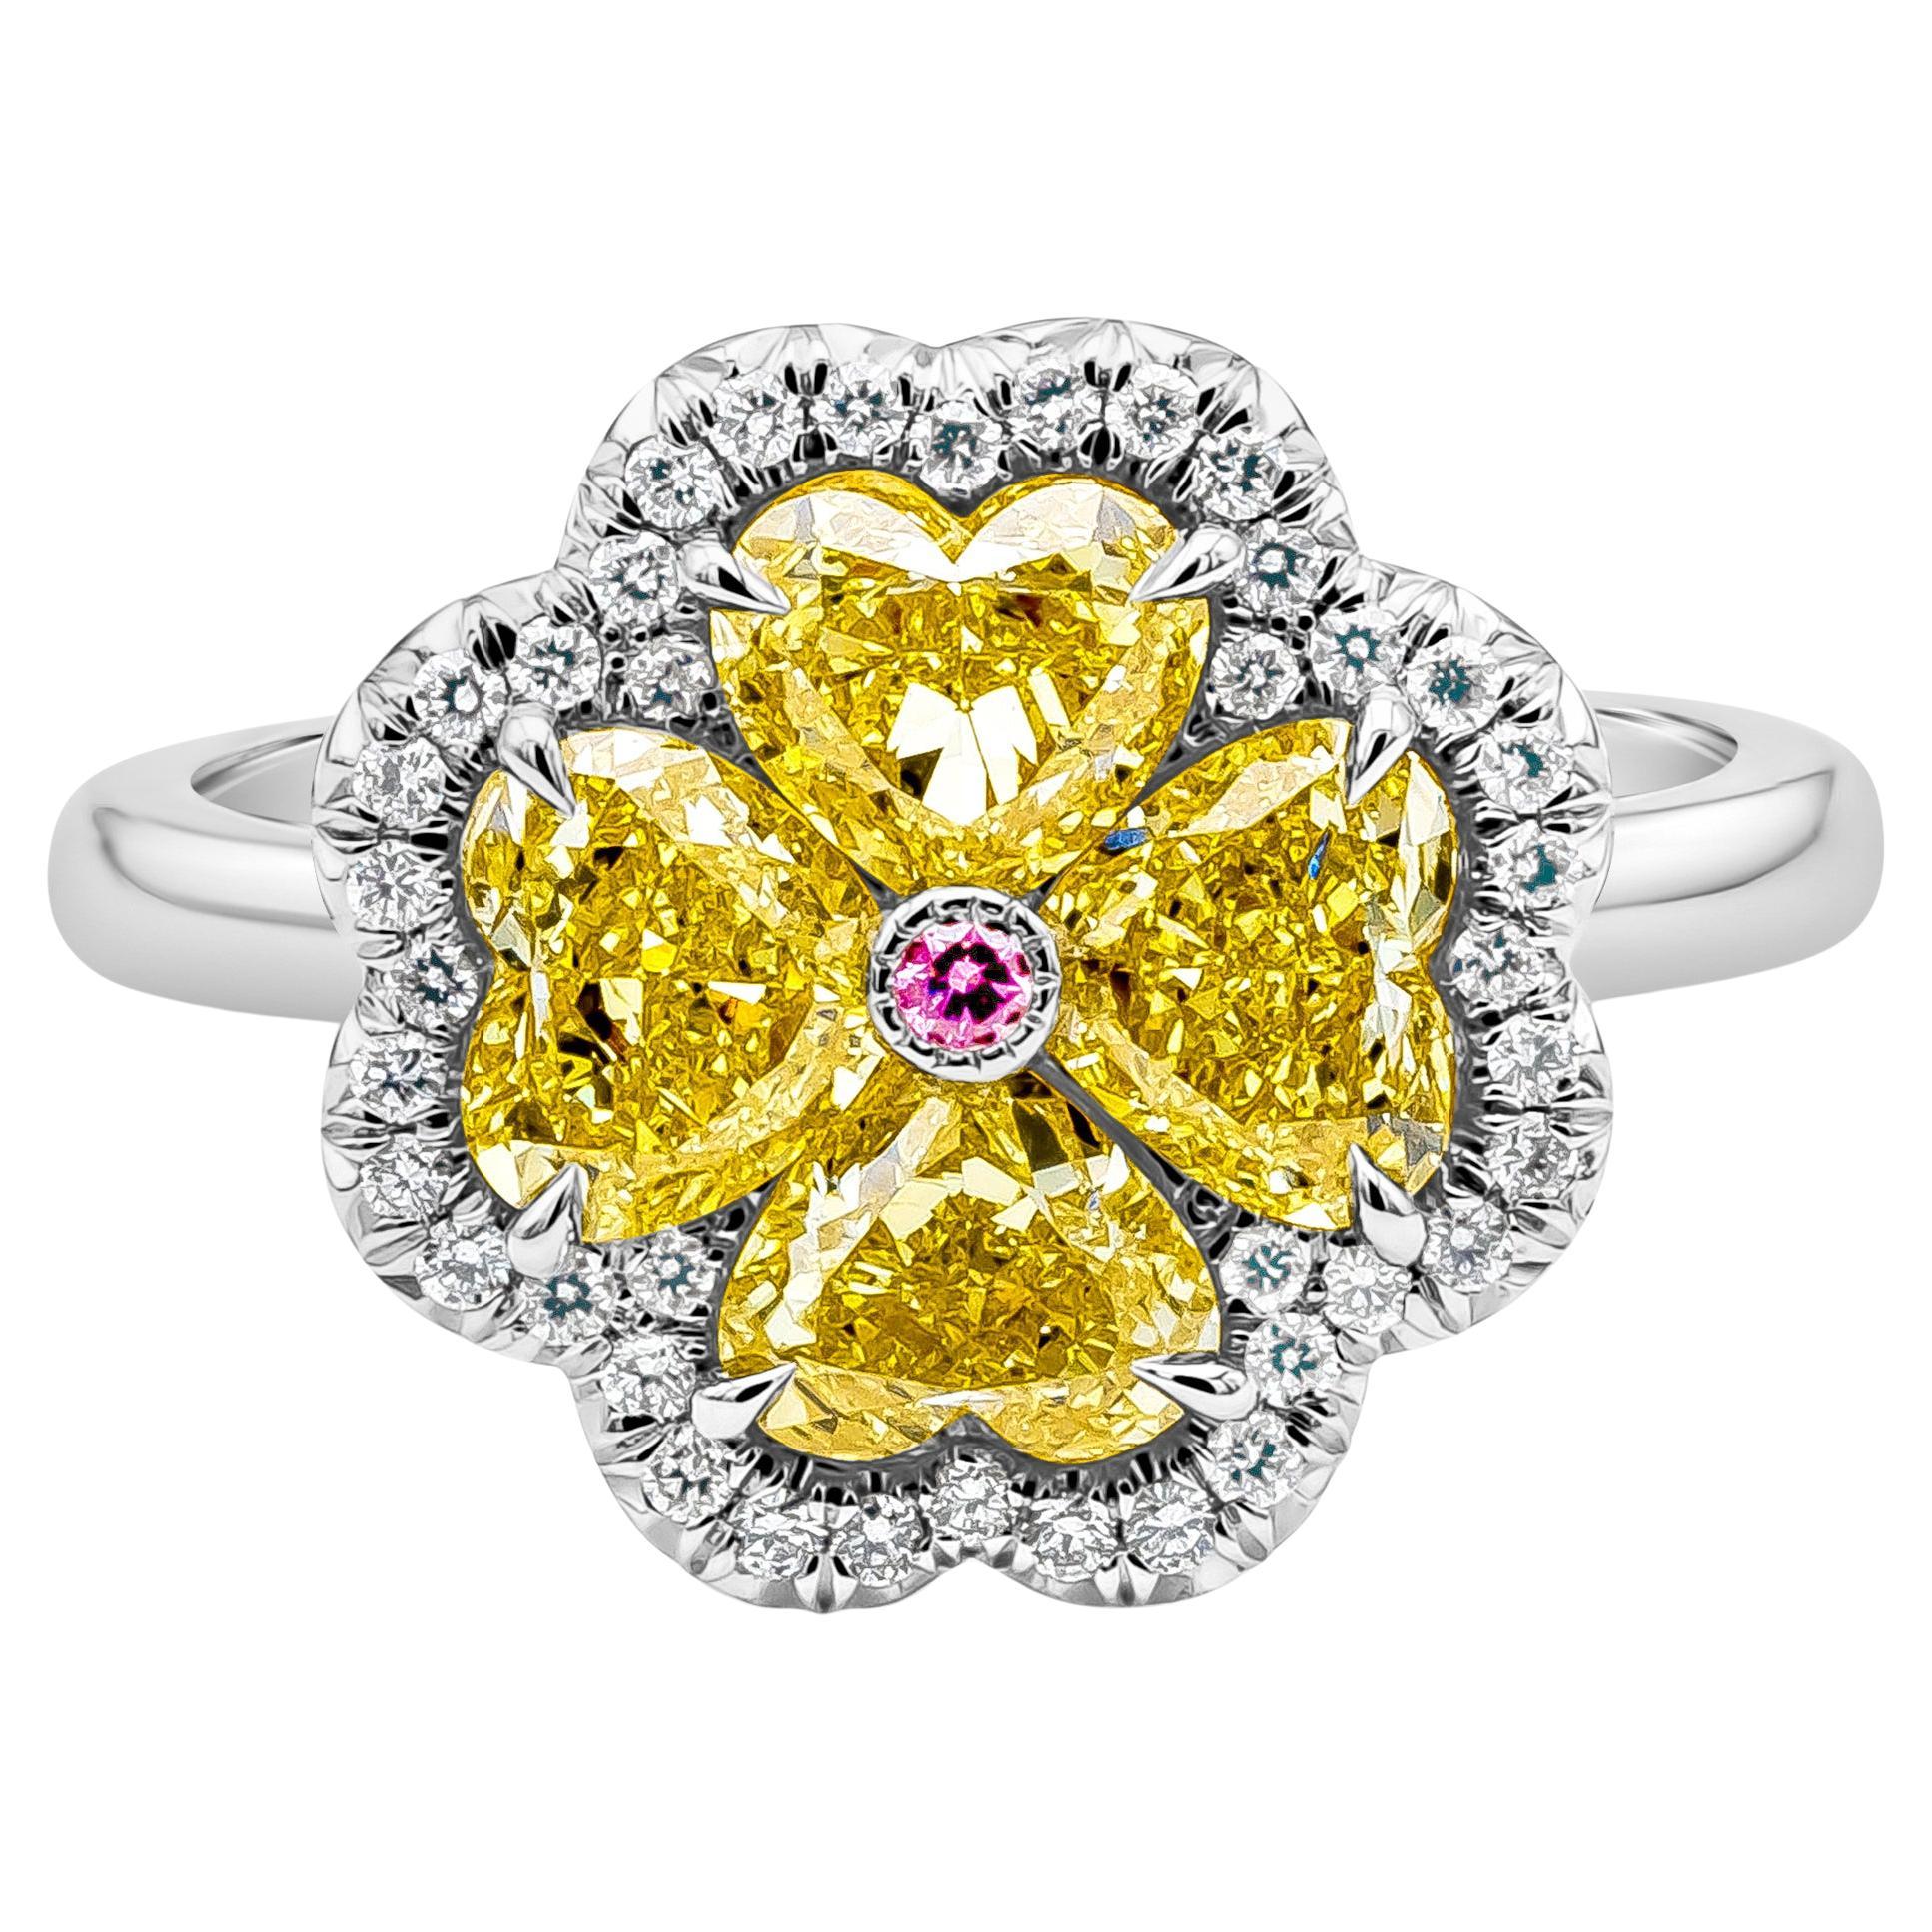 2.21 Carats Heart Shape Fancy Intense Yellow Diamond Clover Leaf Fashion Ring